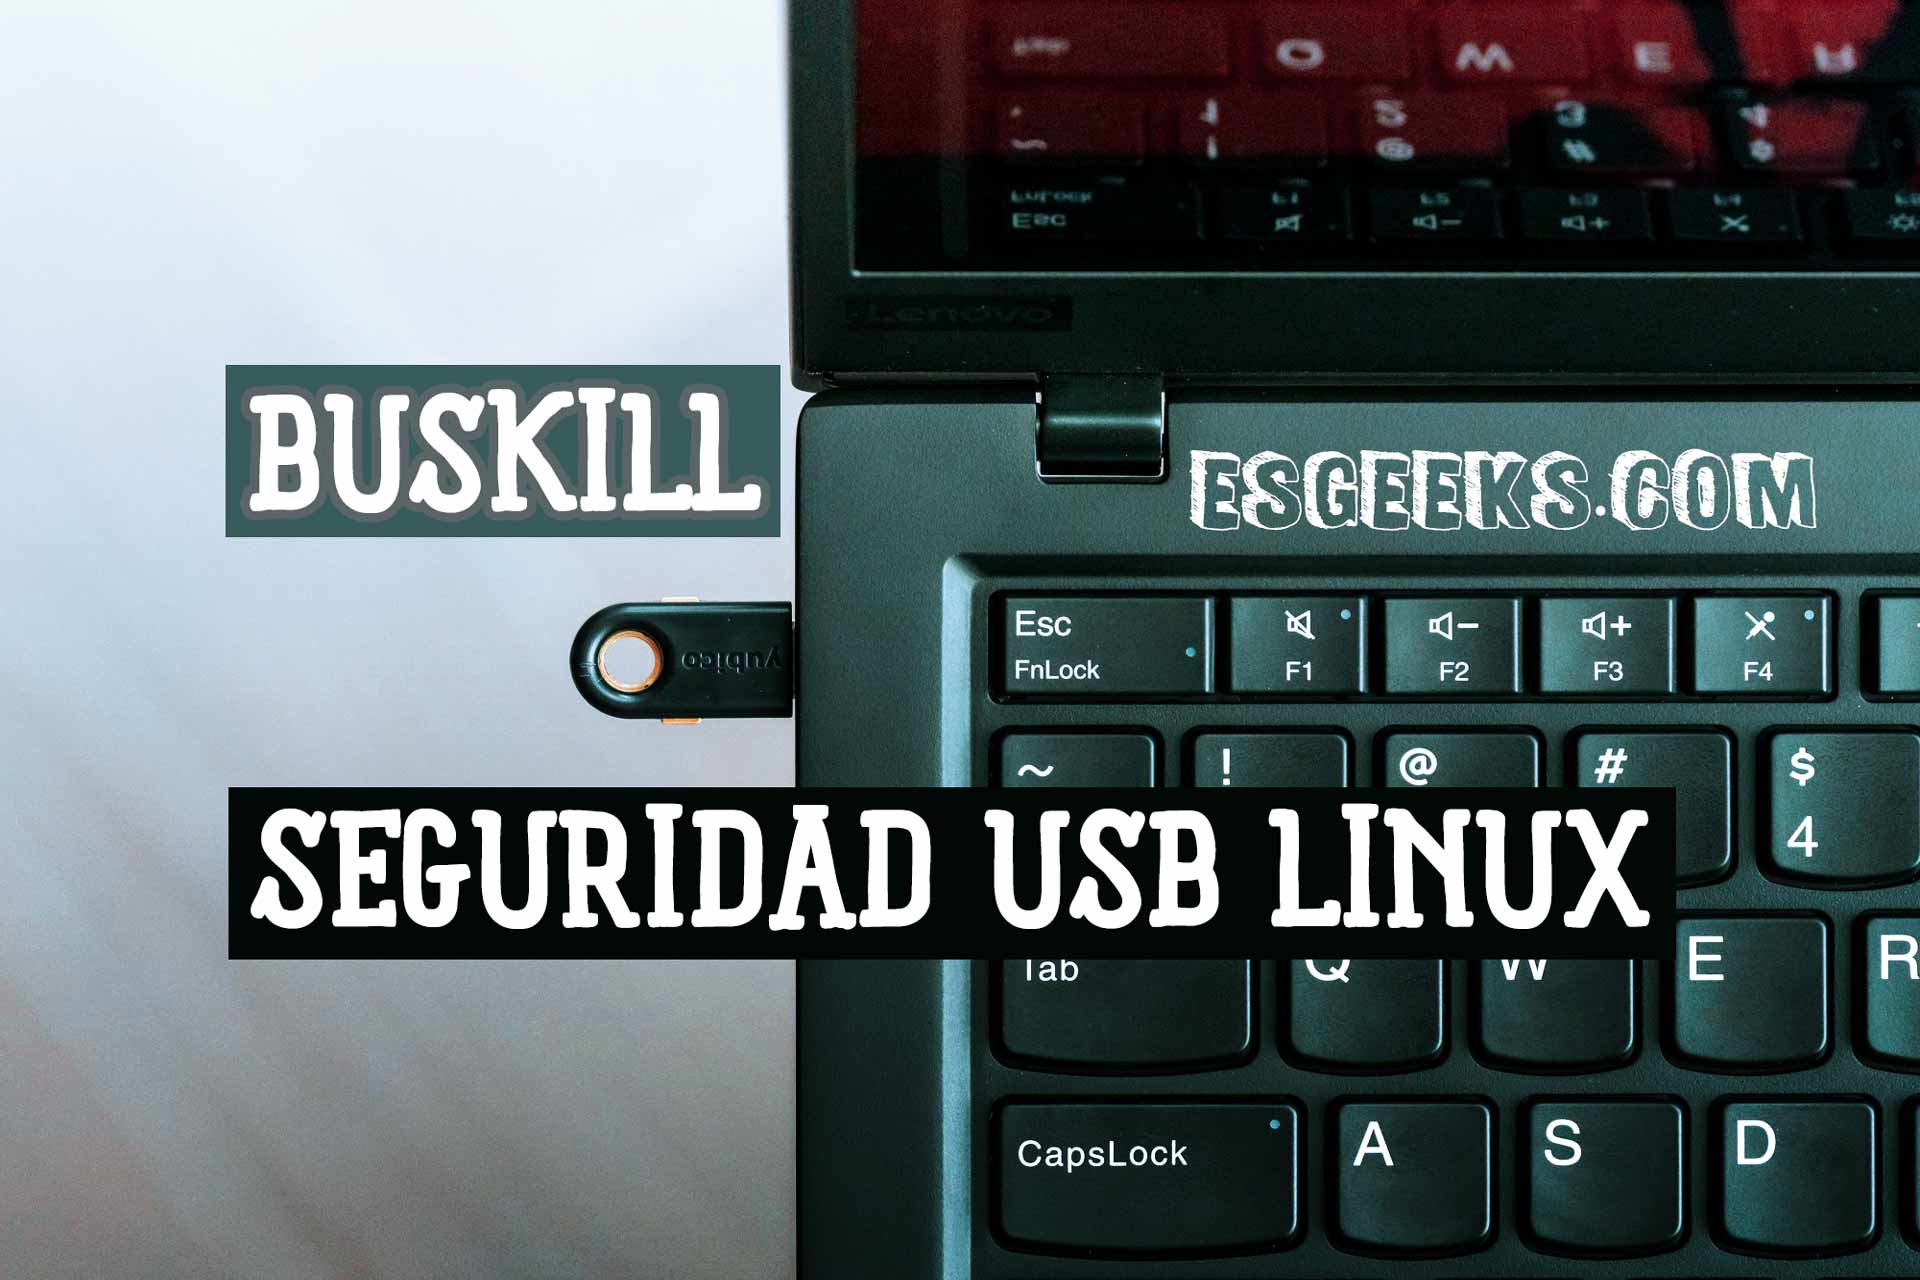 Buskill Seguridad Linux USB